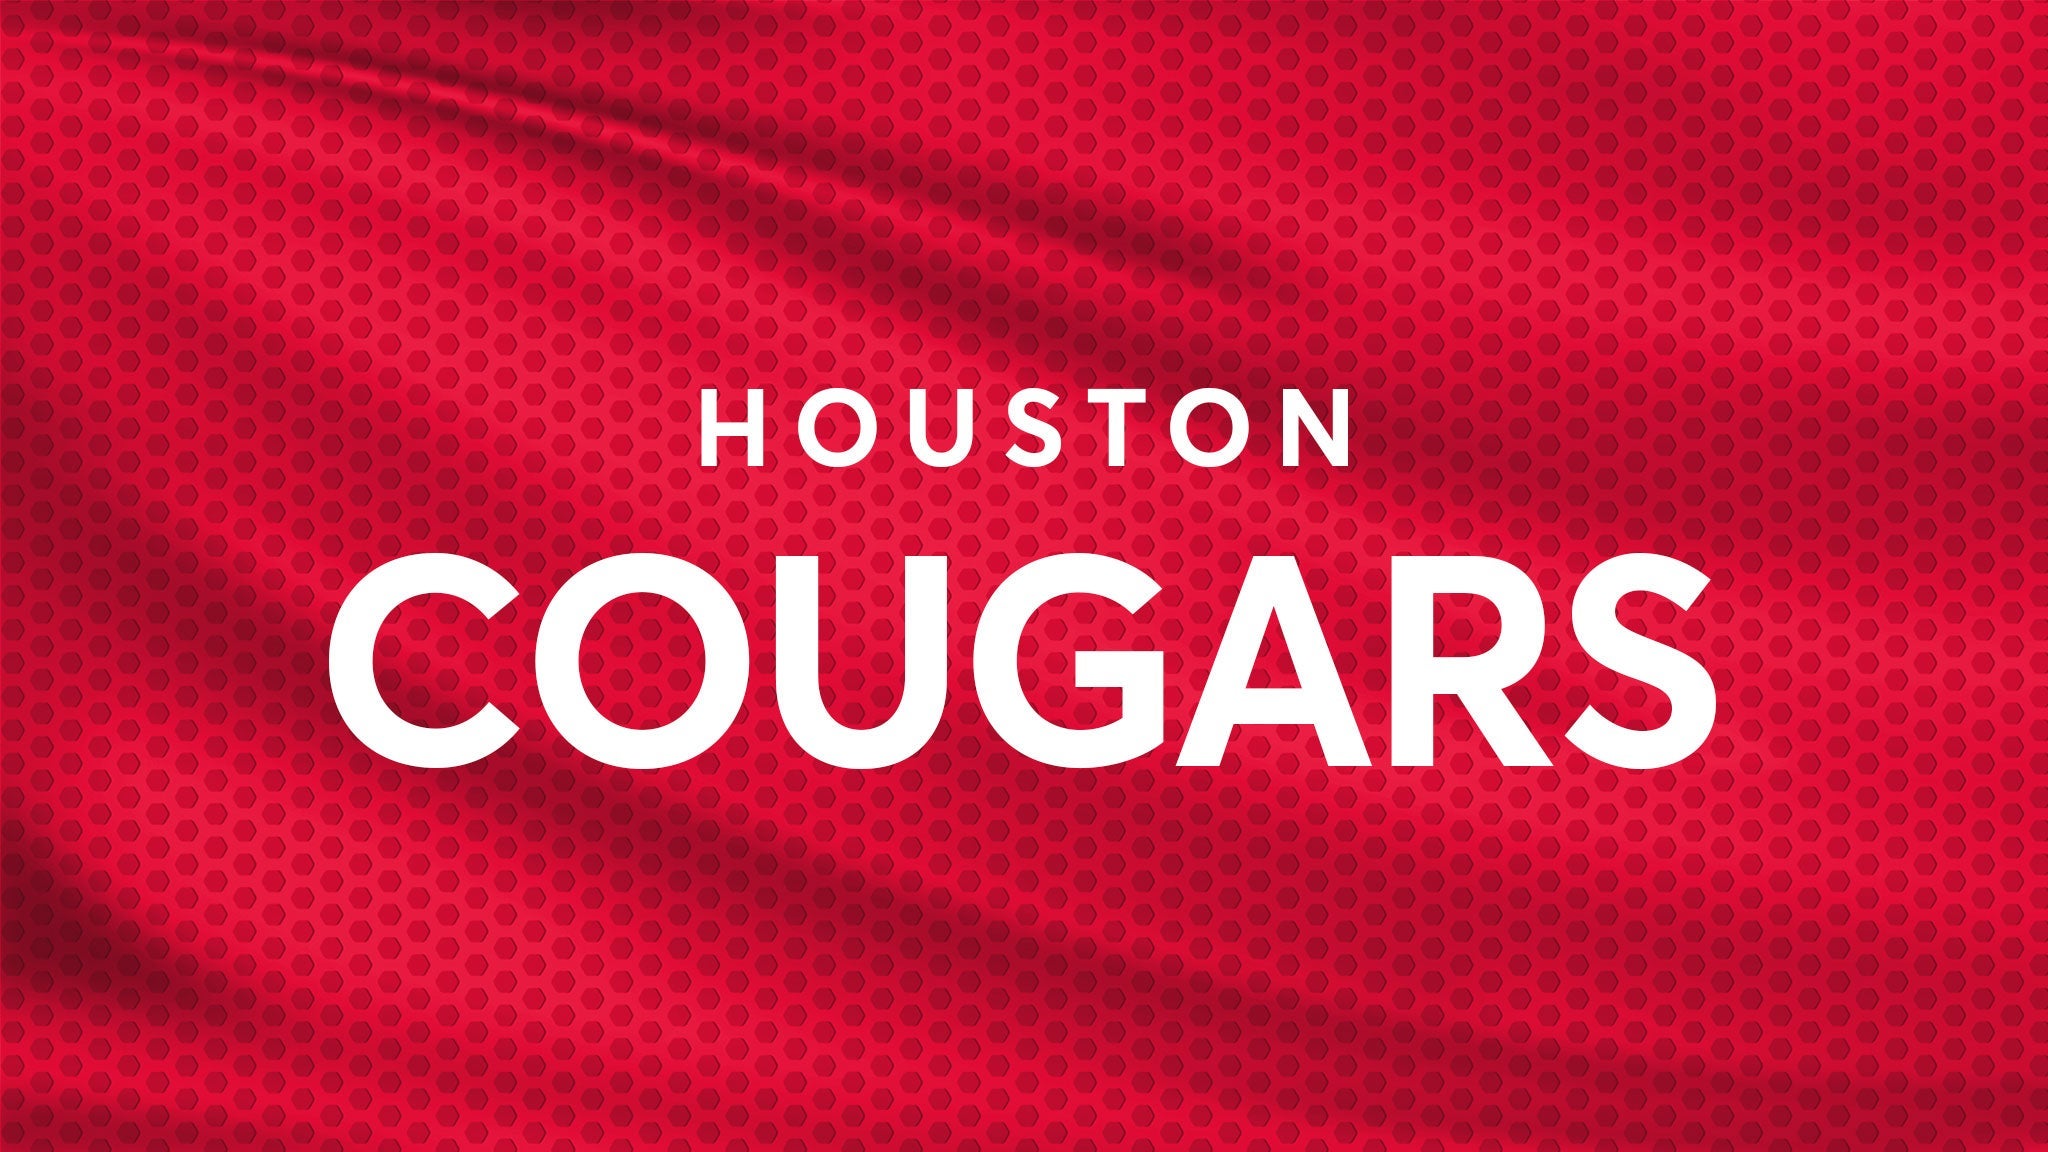 Houston Cougars Football vs. Baylor Bears Football